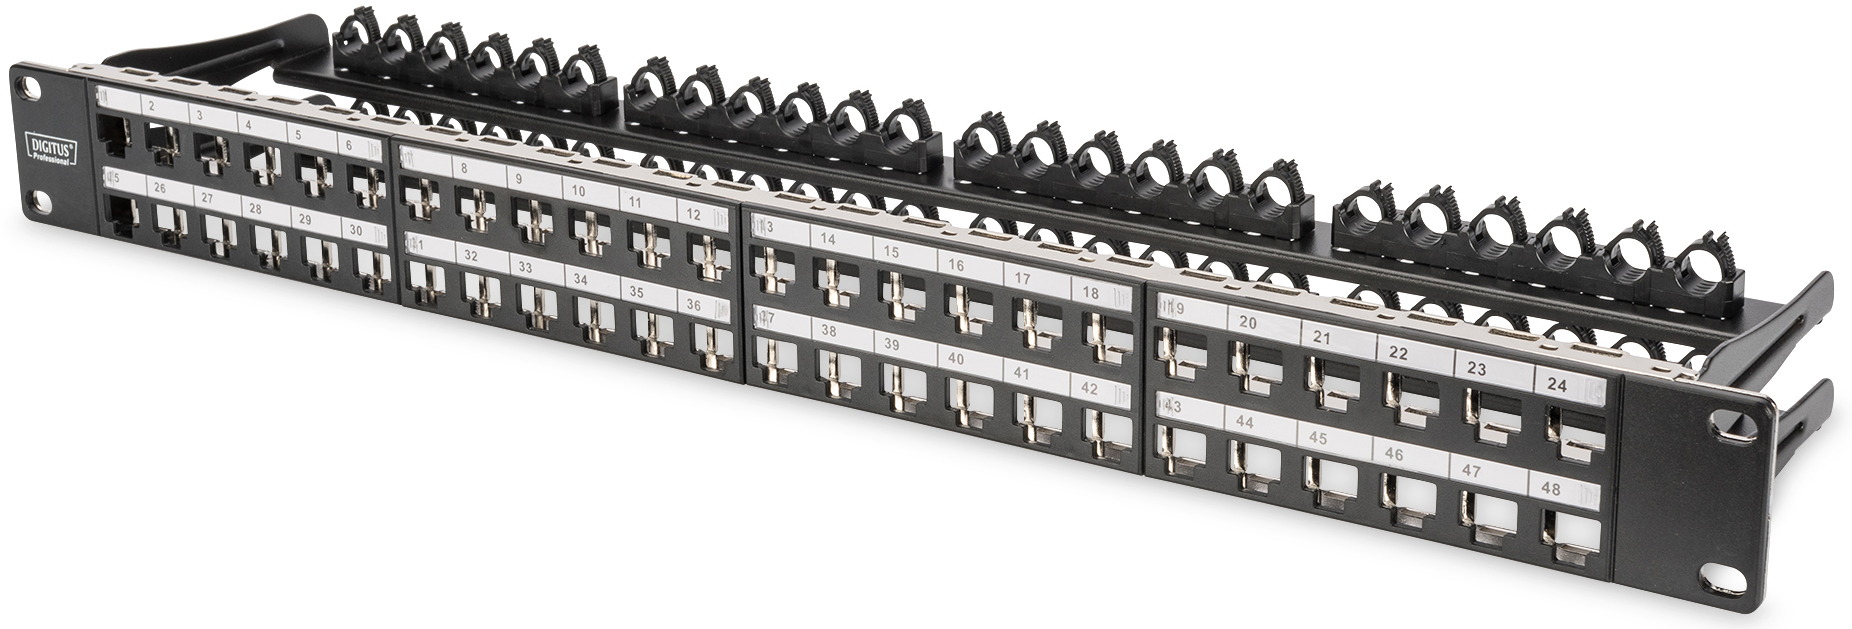 48 Port Modulträger für SNAP-IN Module, High Density, geschirmt, schwarz